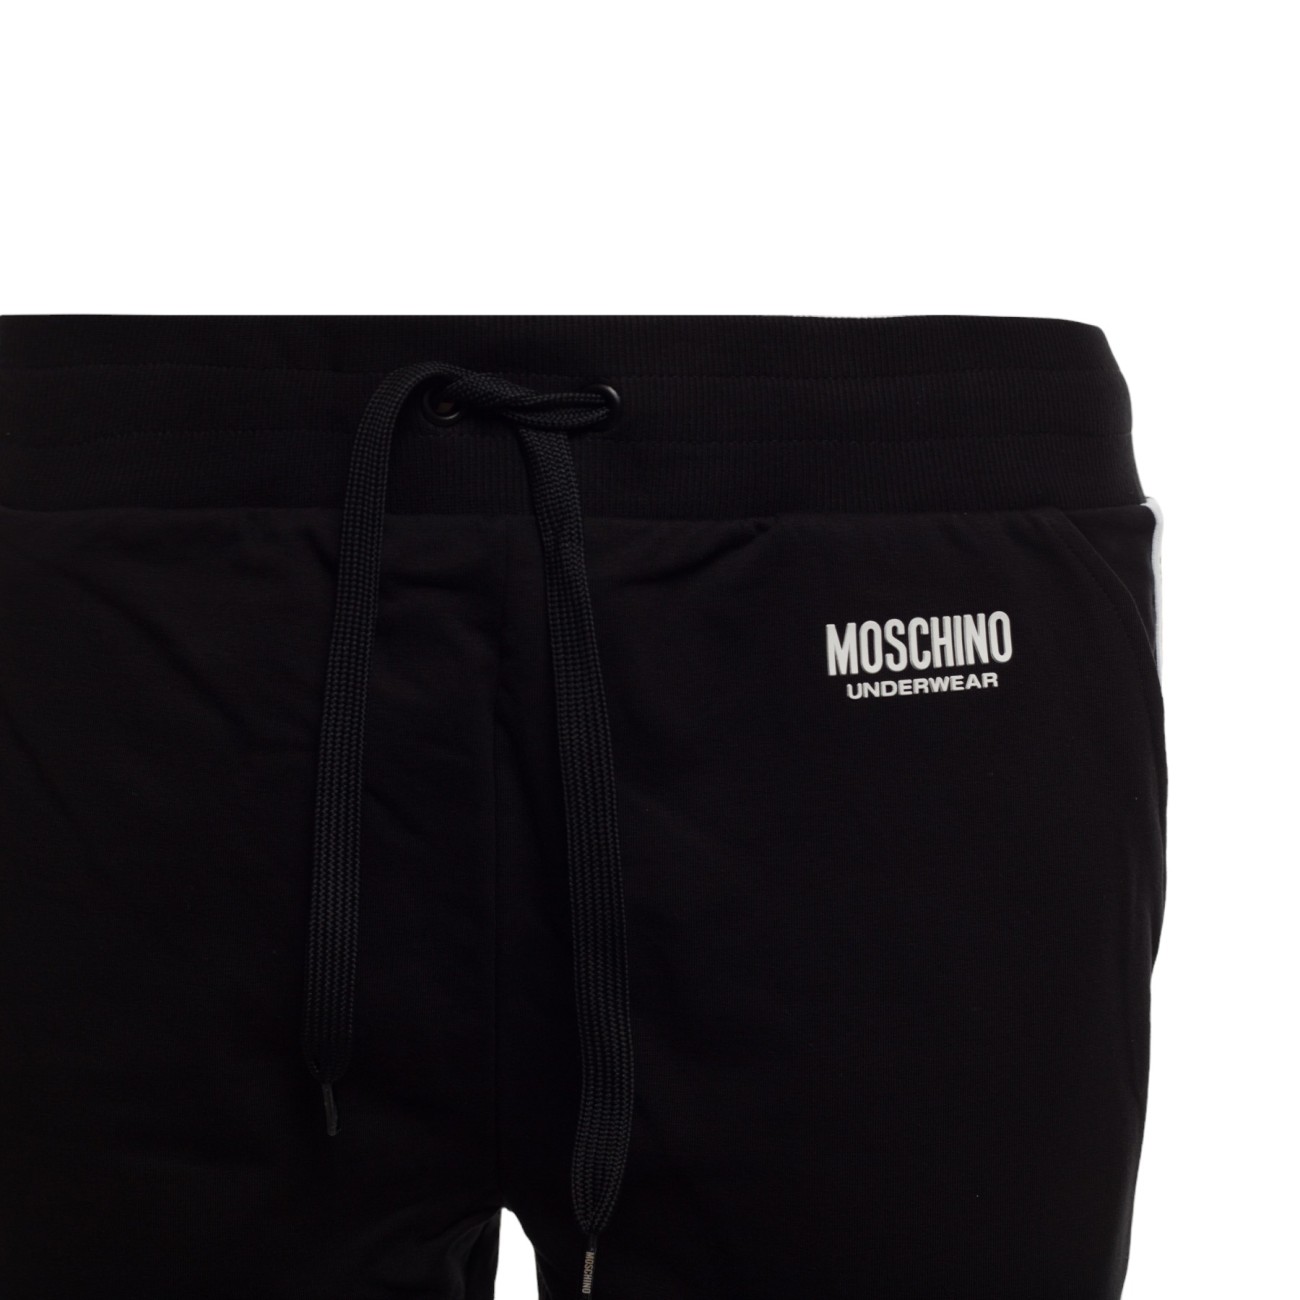 Moschino jogging pants